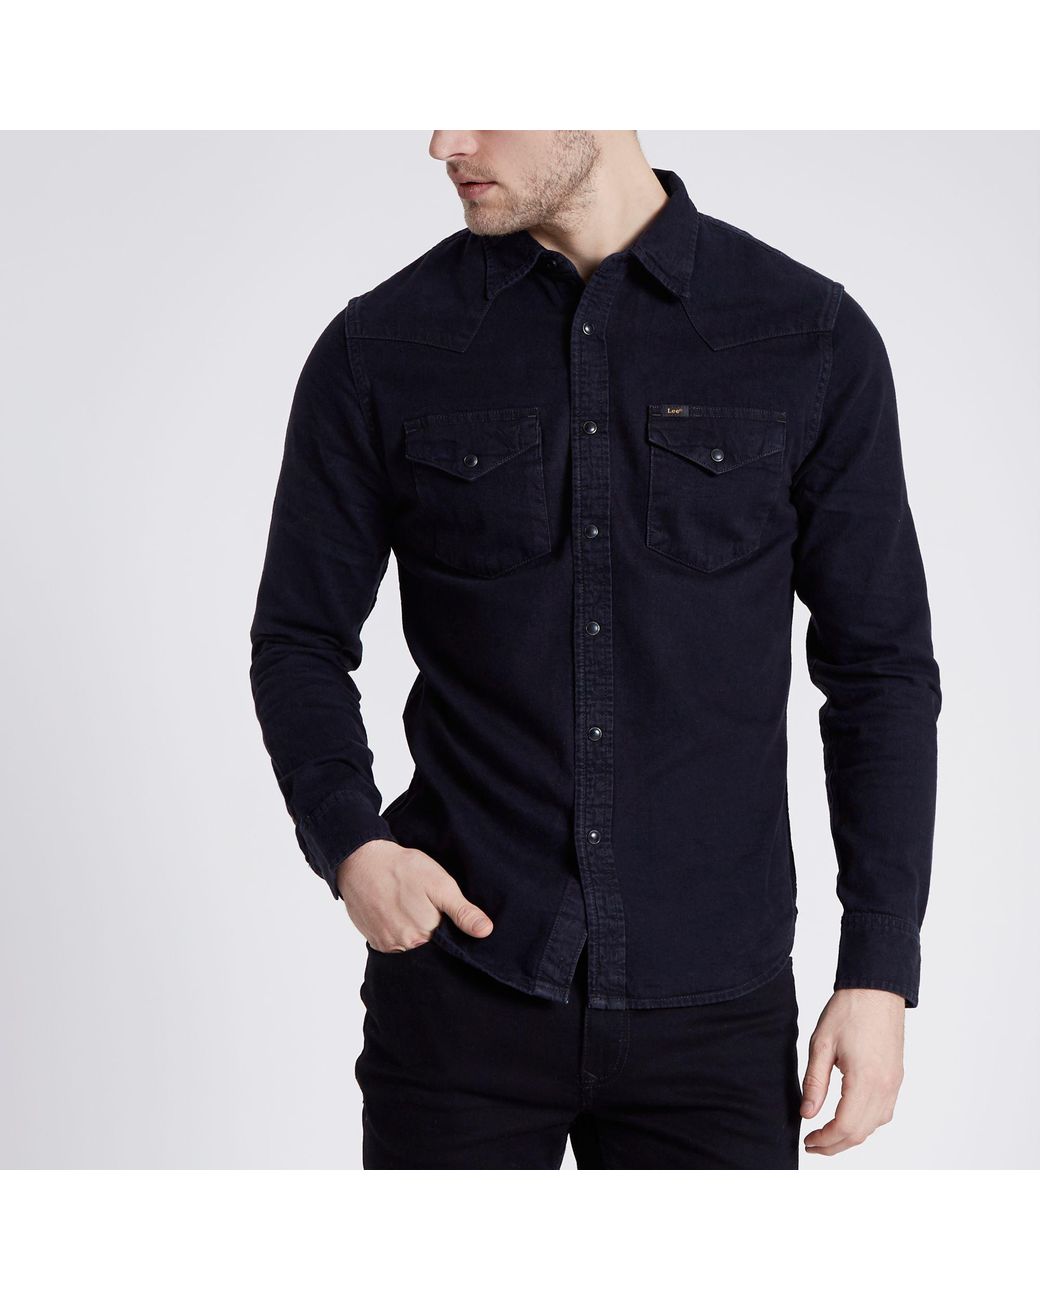 Lee Jeans Slim Fit Denim Western Shirt in Black for Men | Lyst Australia